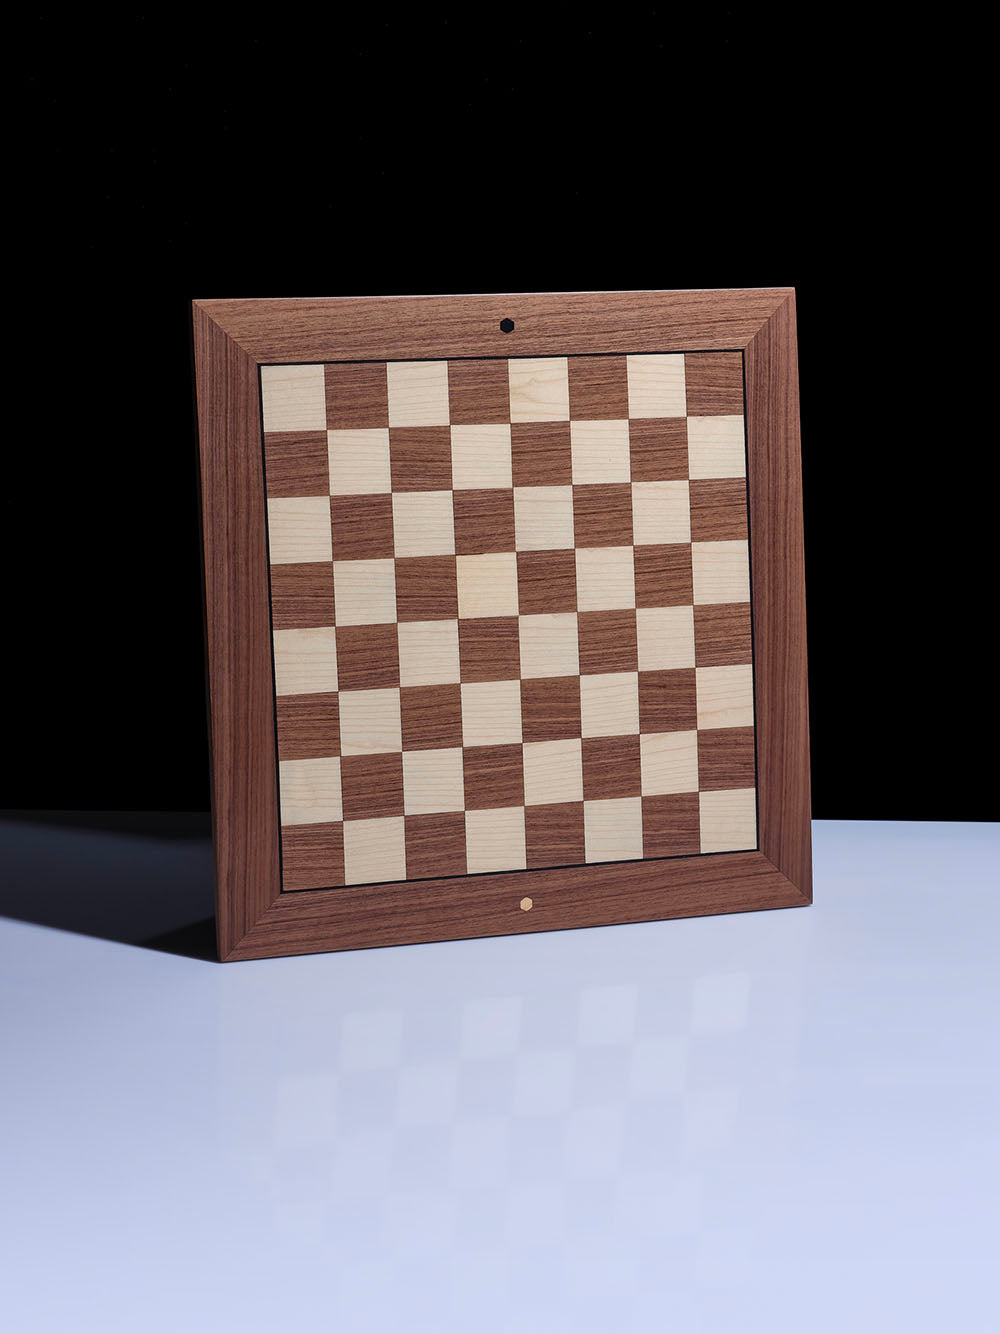 World Chess Championship Set (Walnut Edition) - buy online with worldwide  shipping – World Chess Shop